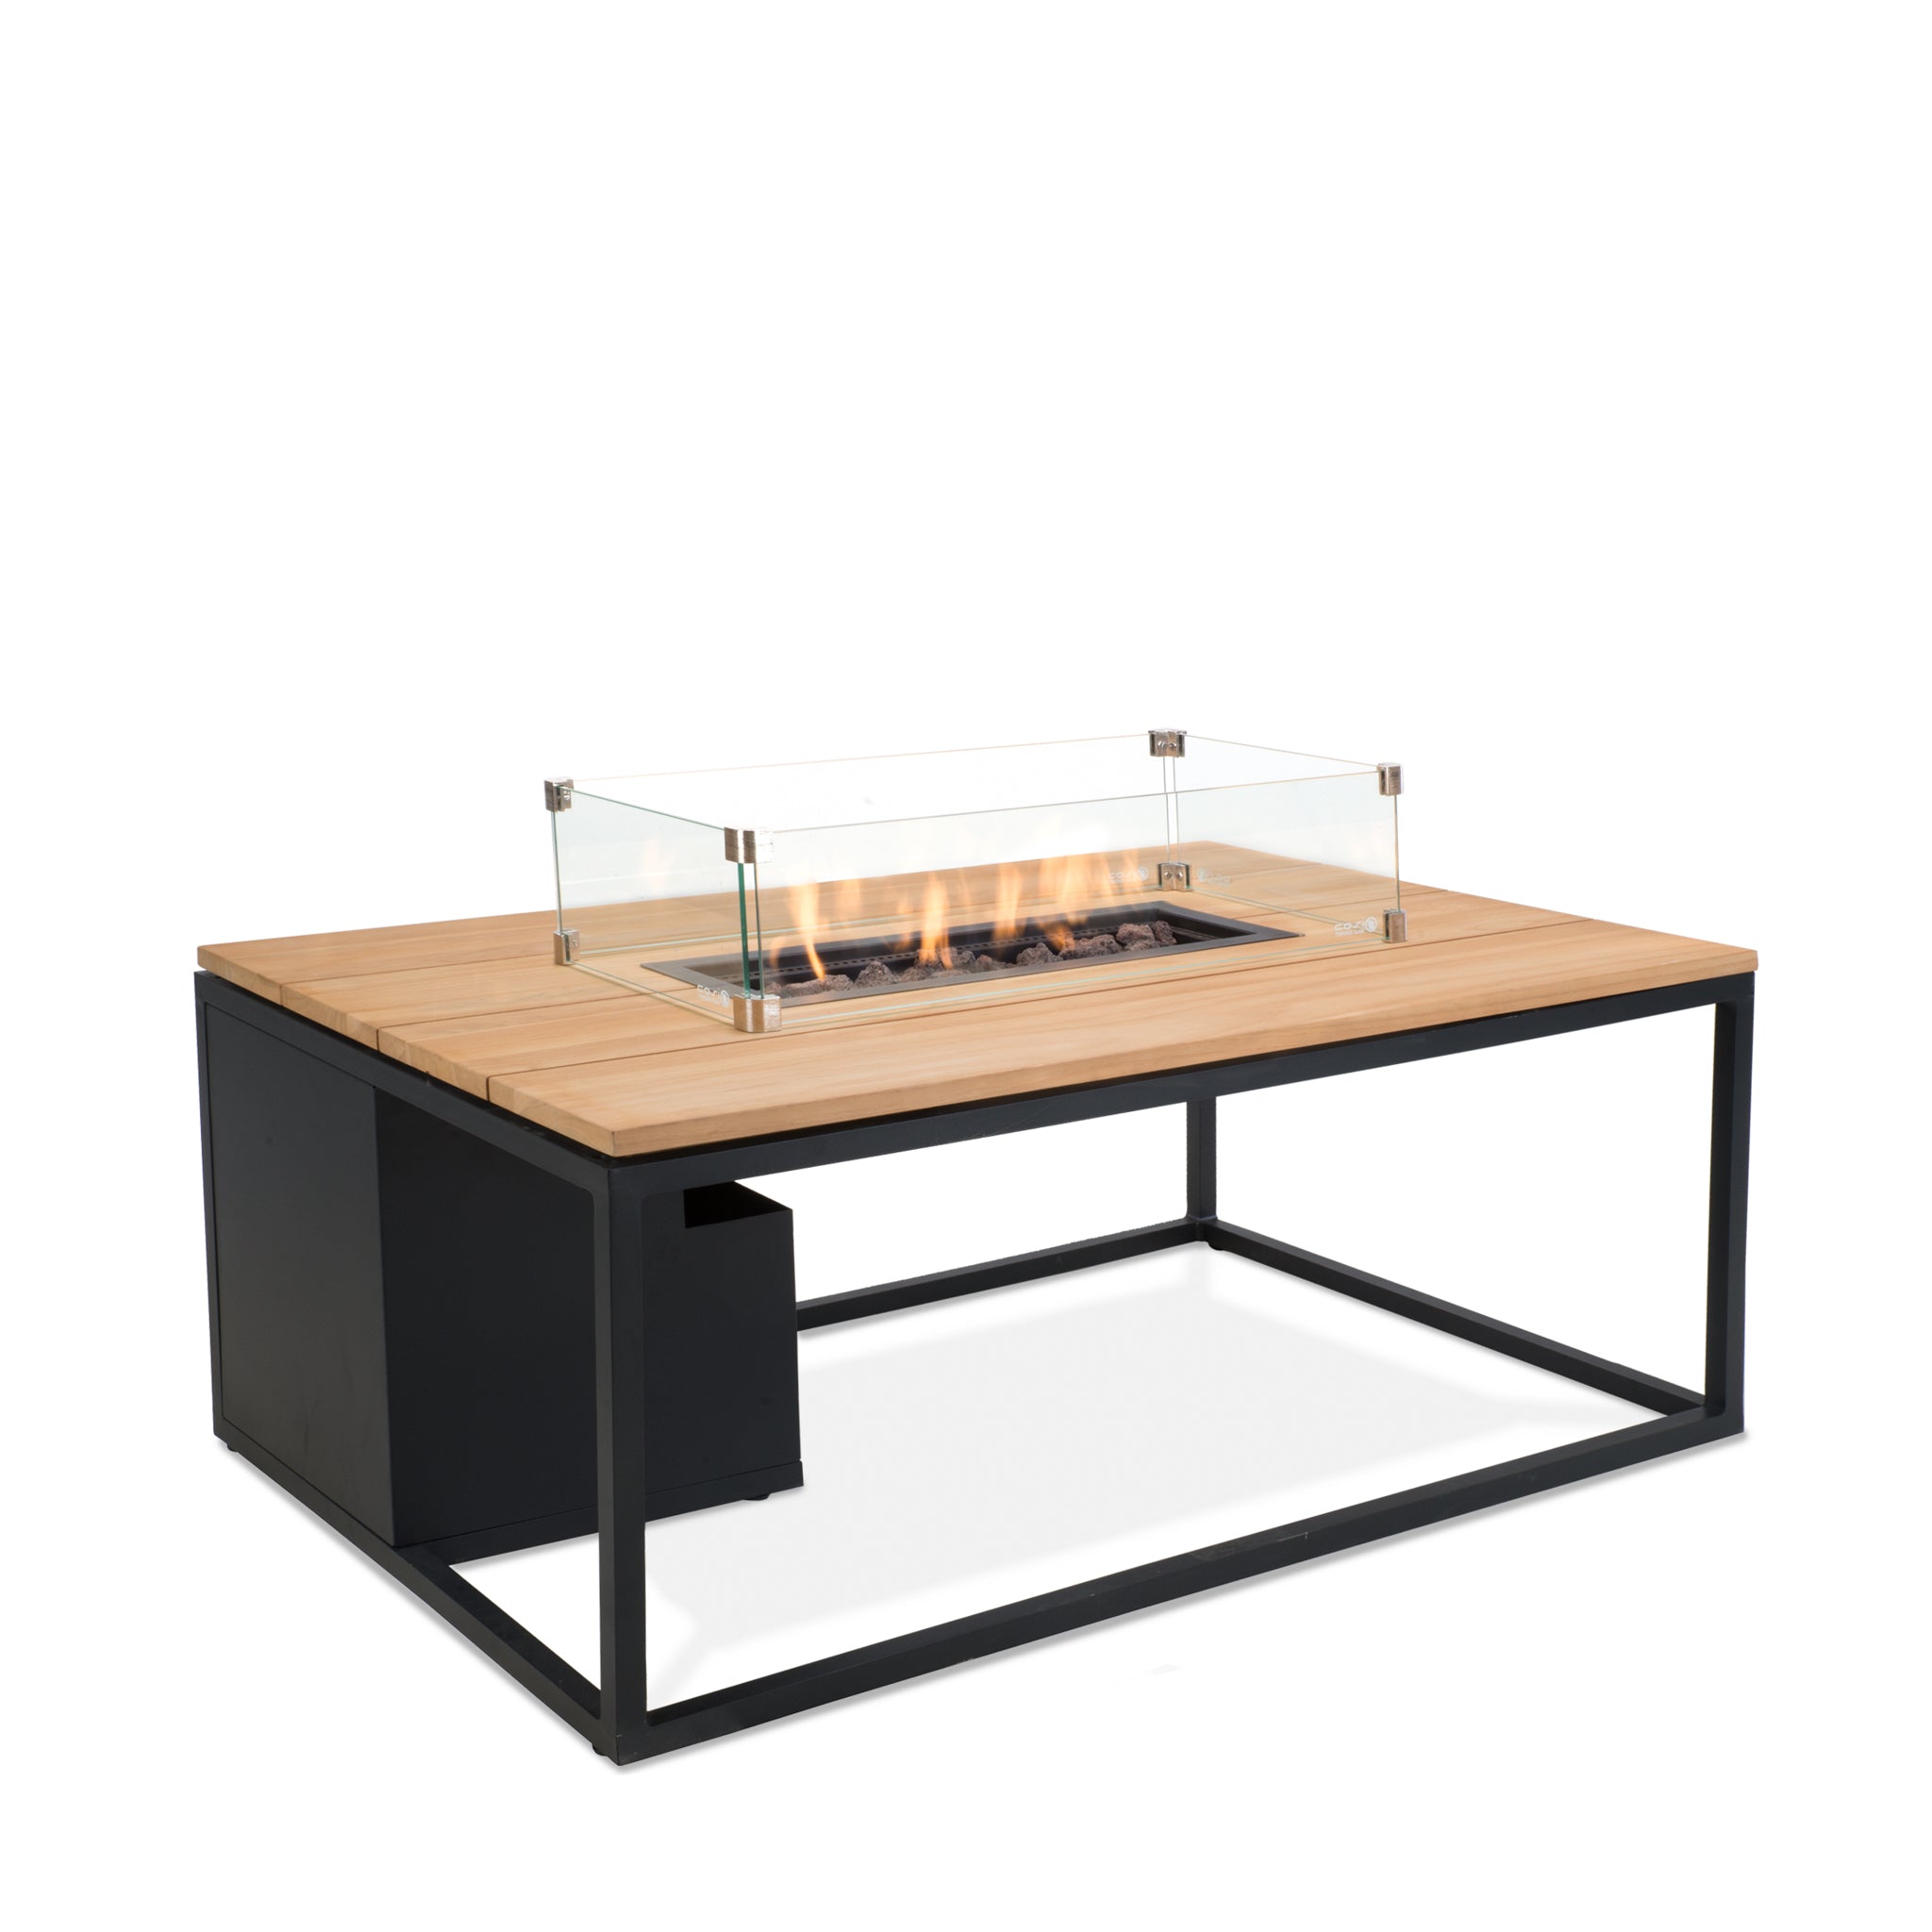 Cosiloft 120 Black and Teak Fire Pit Table